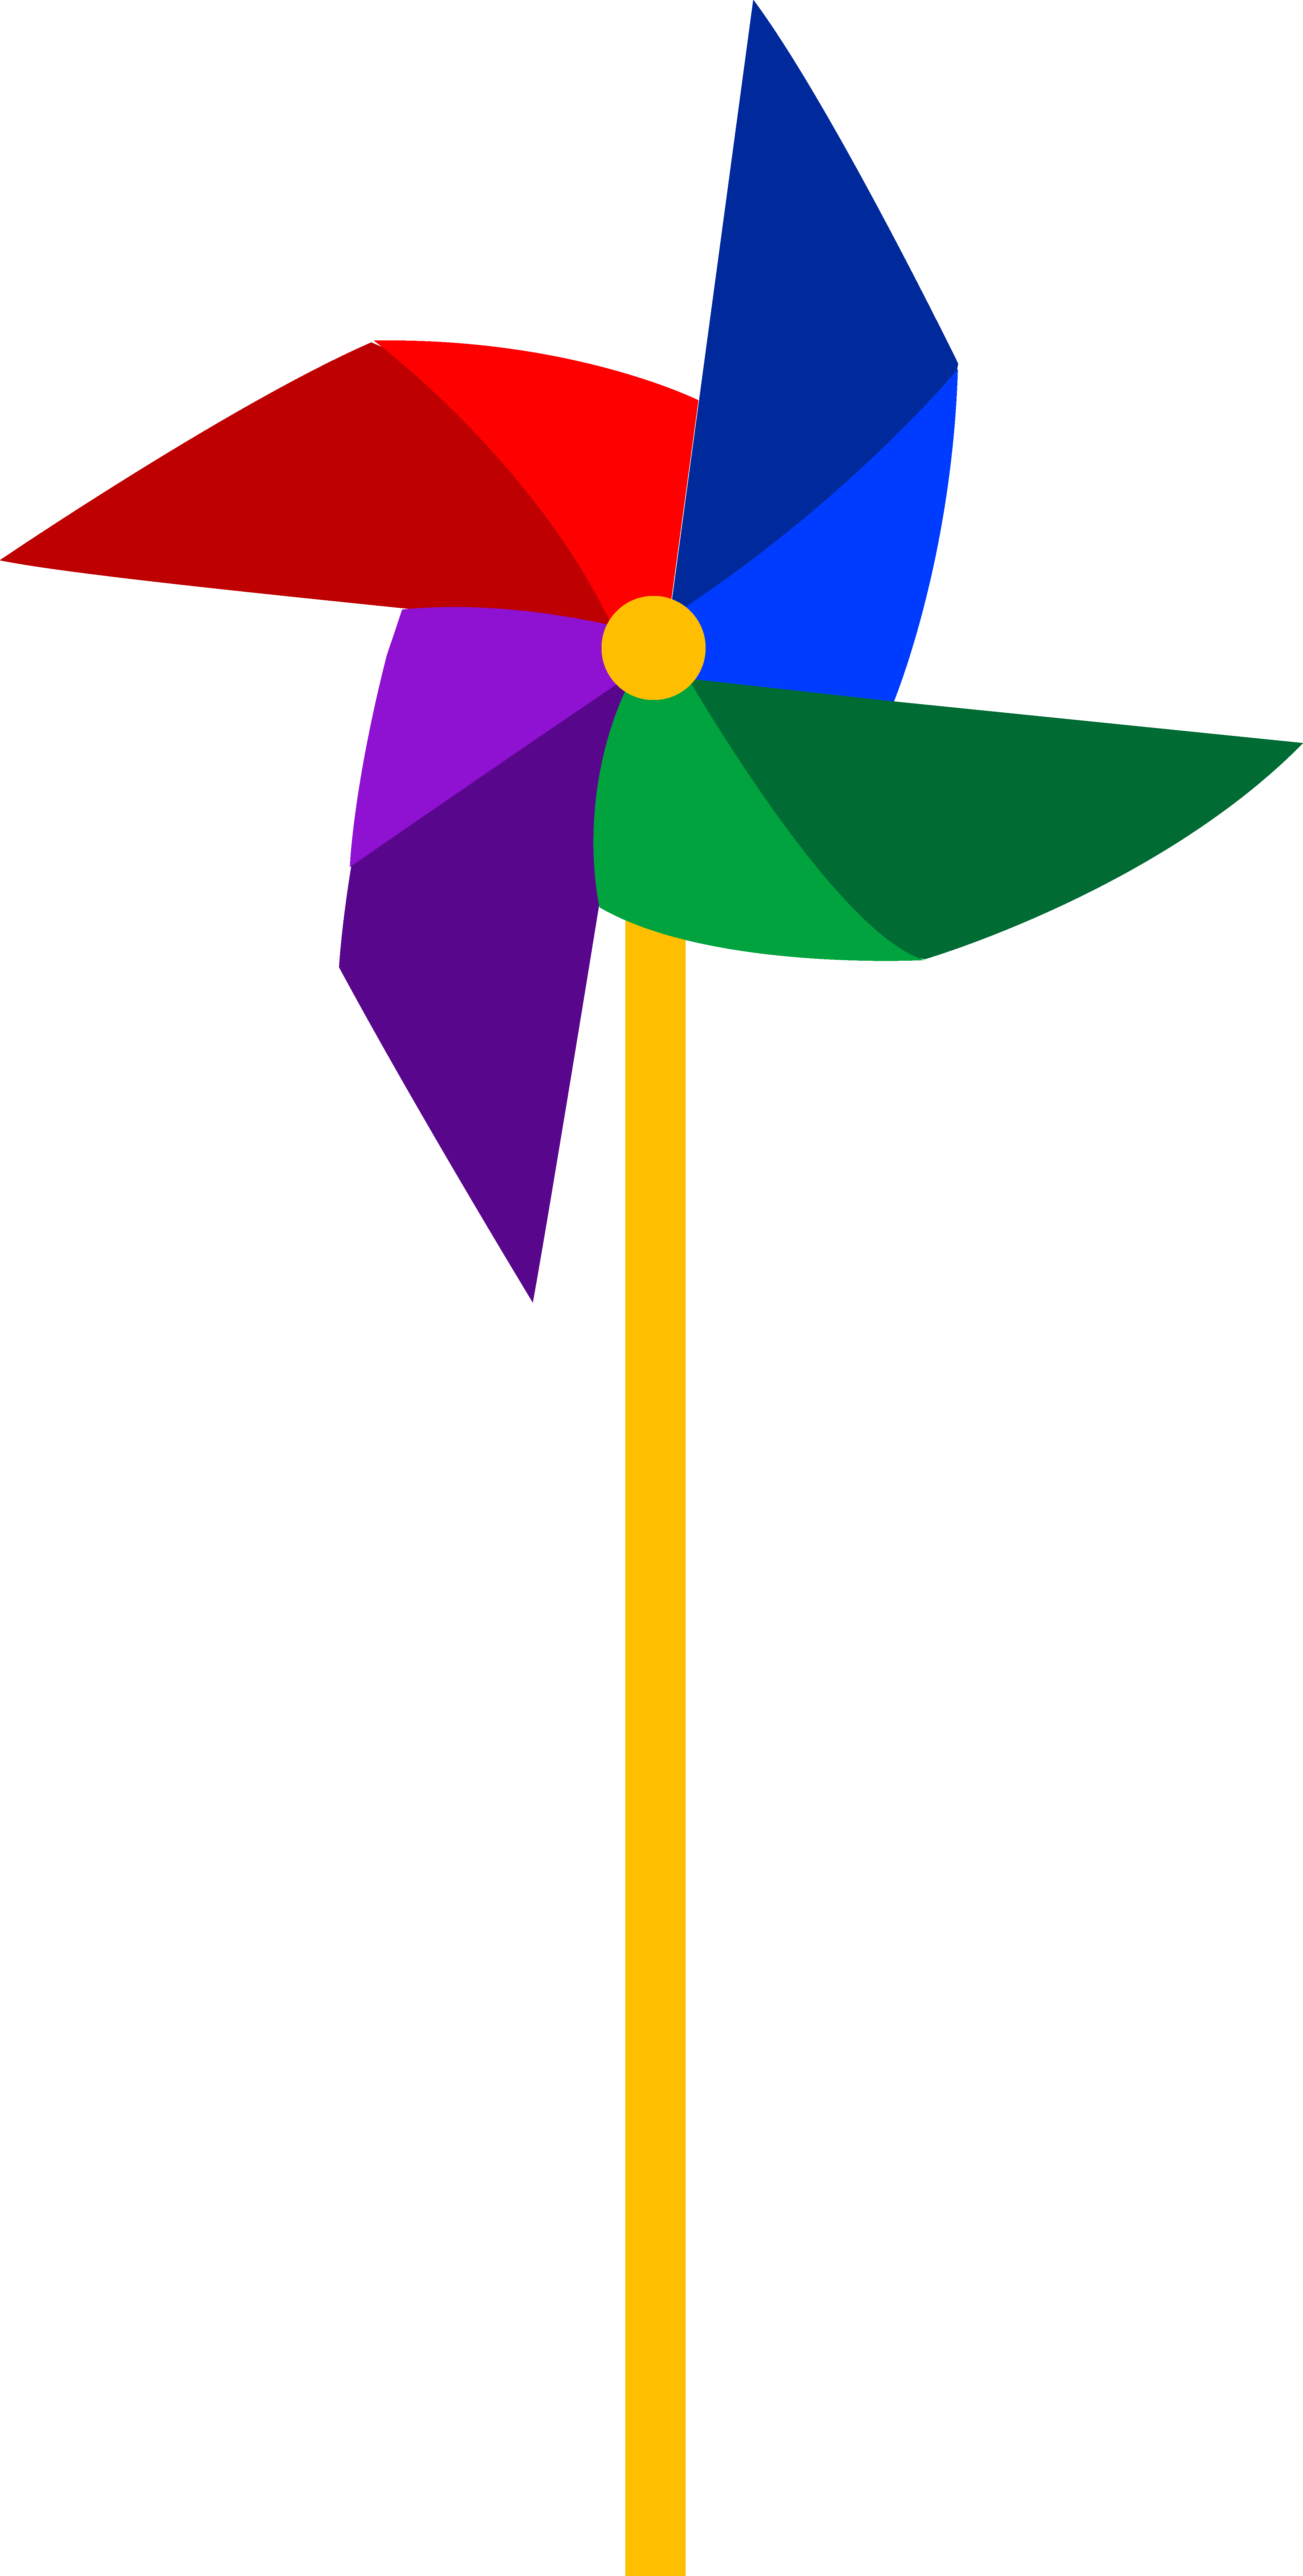 Clip art of a colorful pinwheel toy | Sweet Clip Art | Pinterest ...